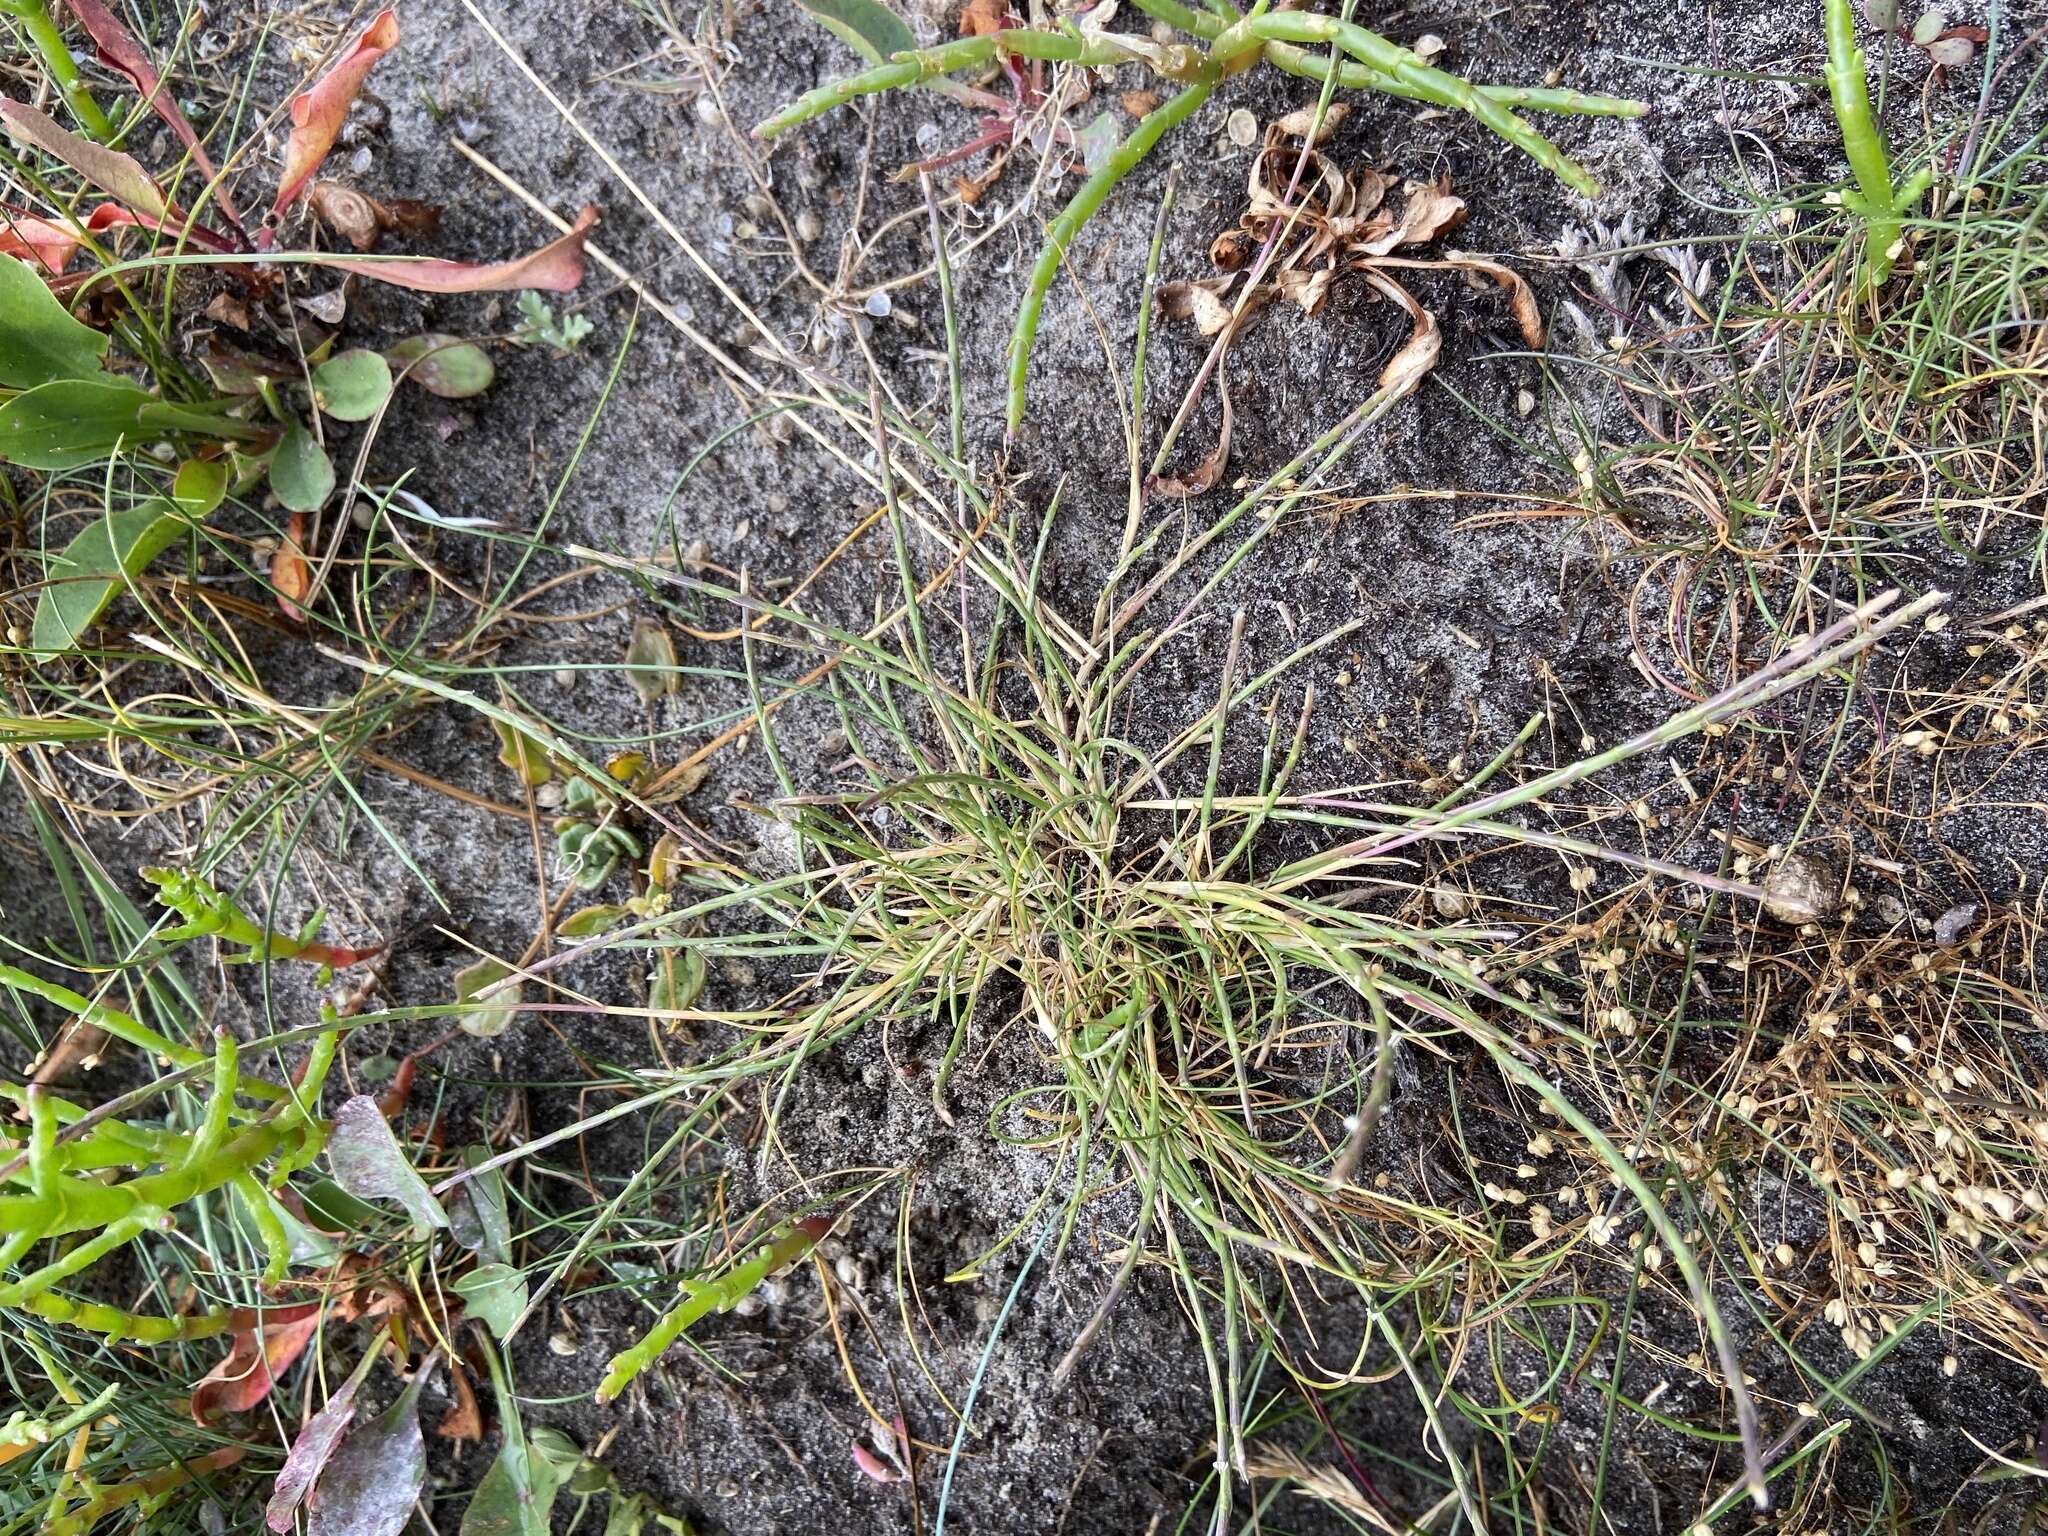 Image of sea hard-grass